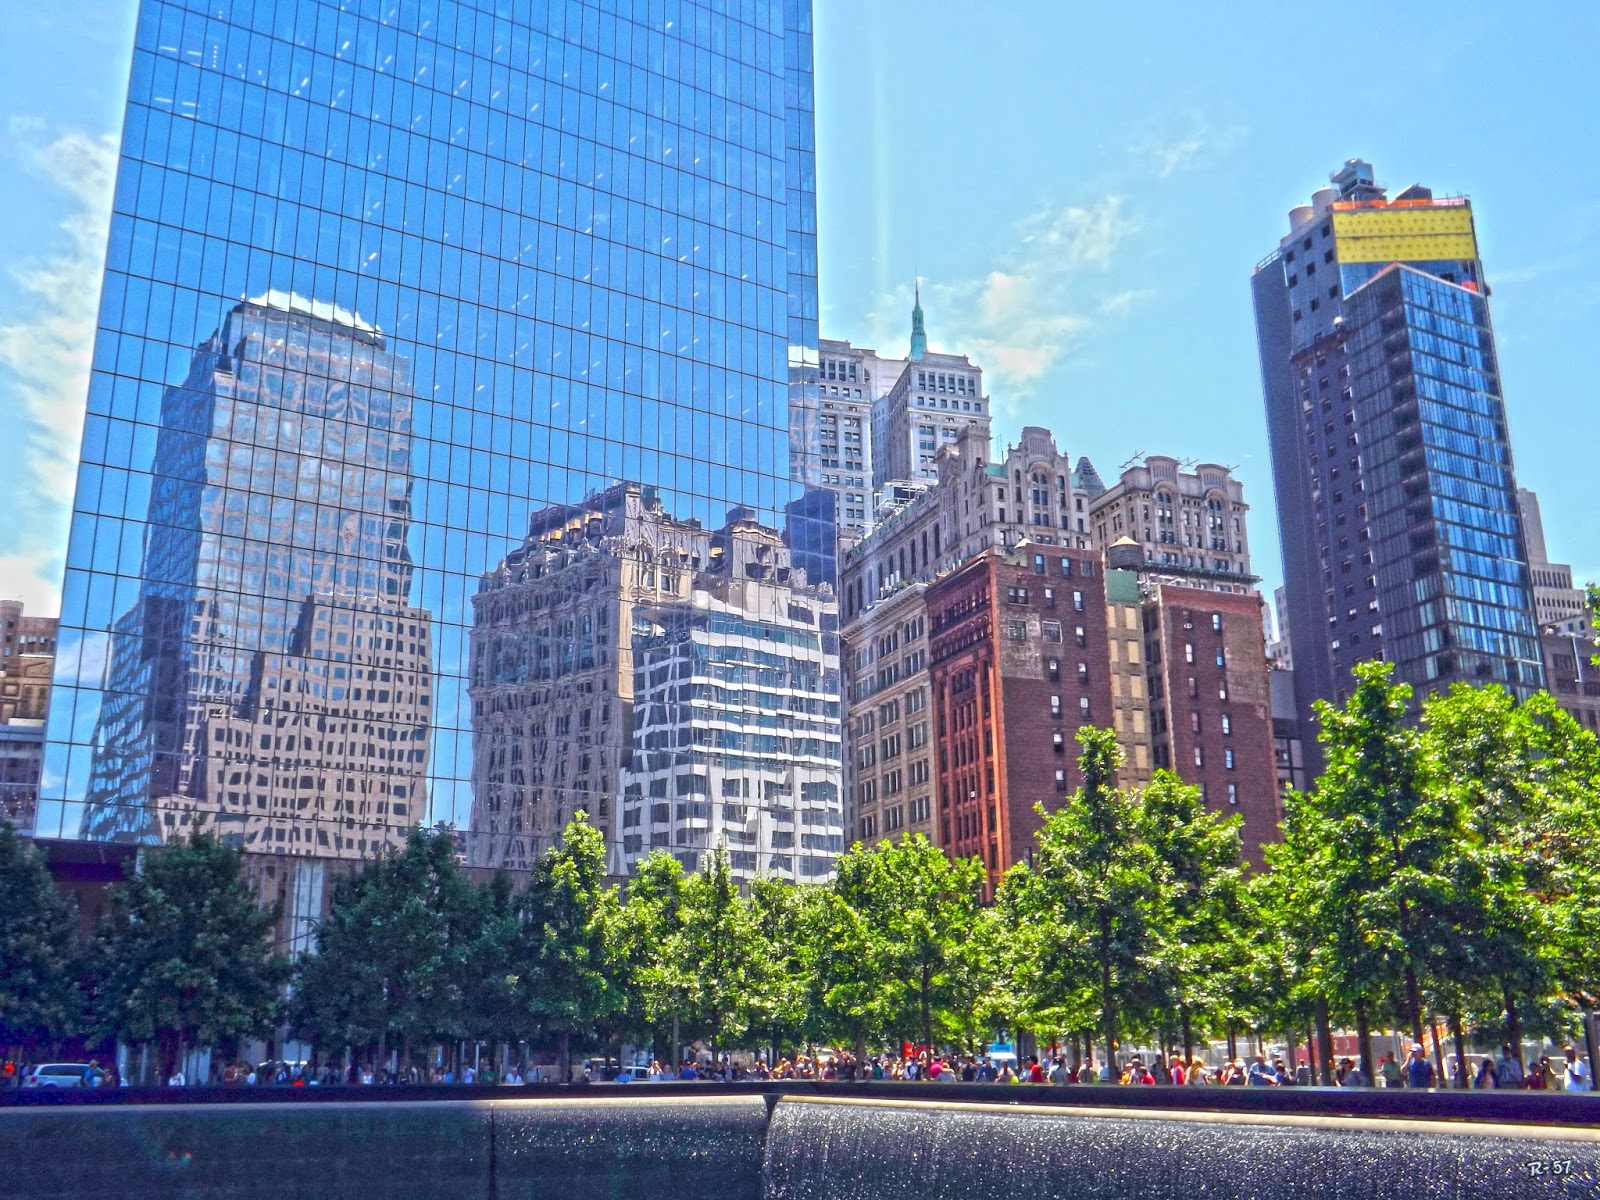 Photo of Parque y entrada estatua libertad in New York City, New York, United States - 2 Picture of Point of interest, Establishment, Park